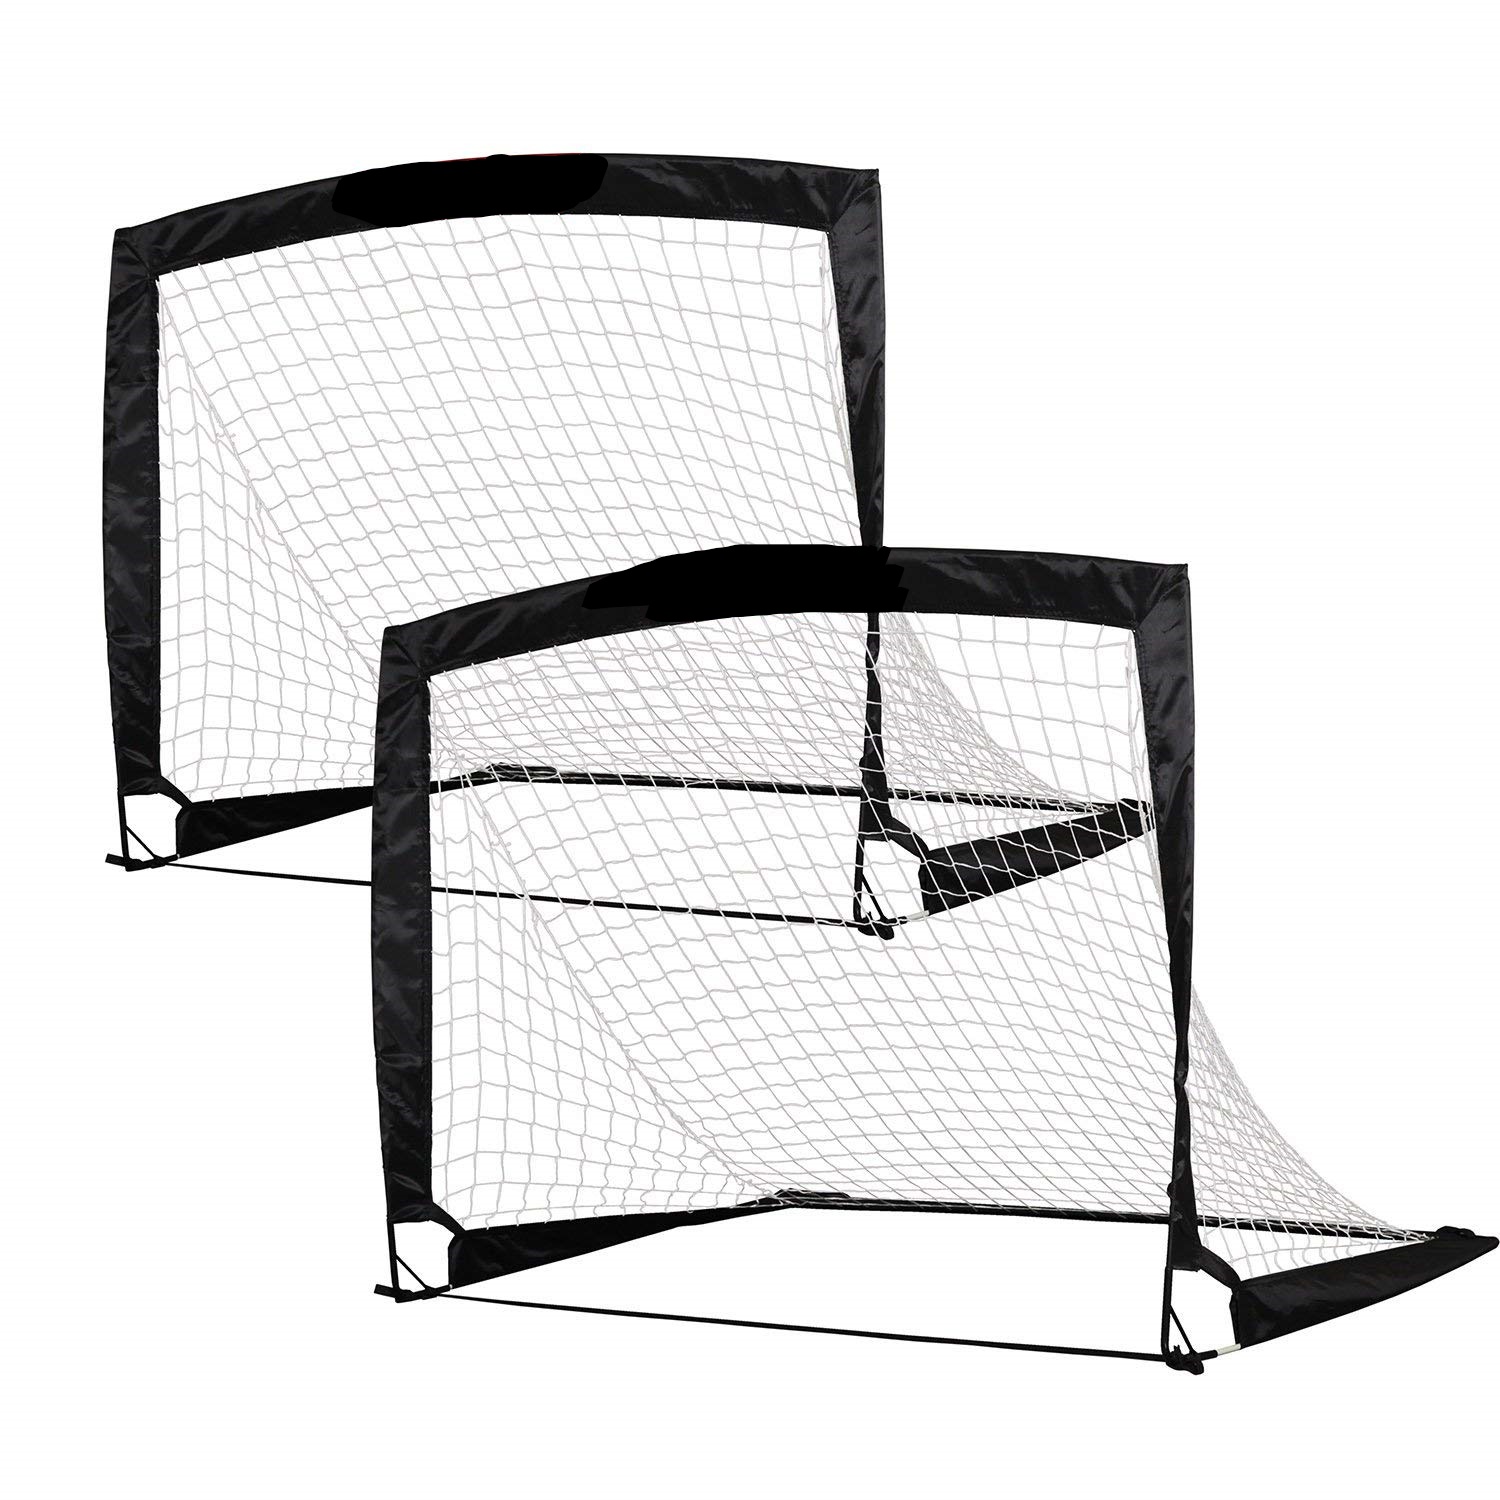 AIOIAI 4ftx3ft Easy Fold-up Portable Training Soccer Goal, Set of 2 